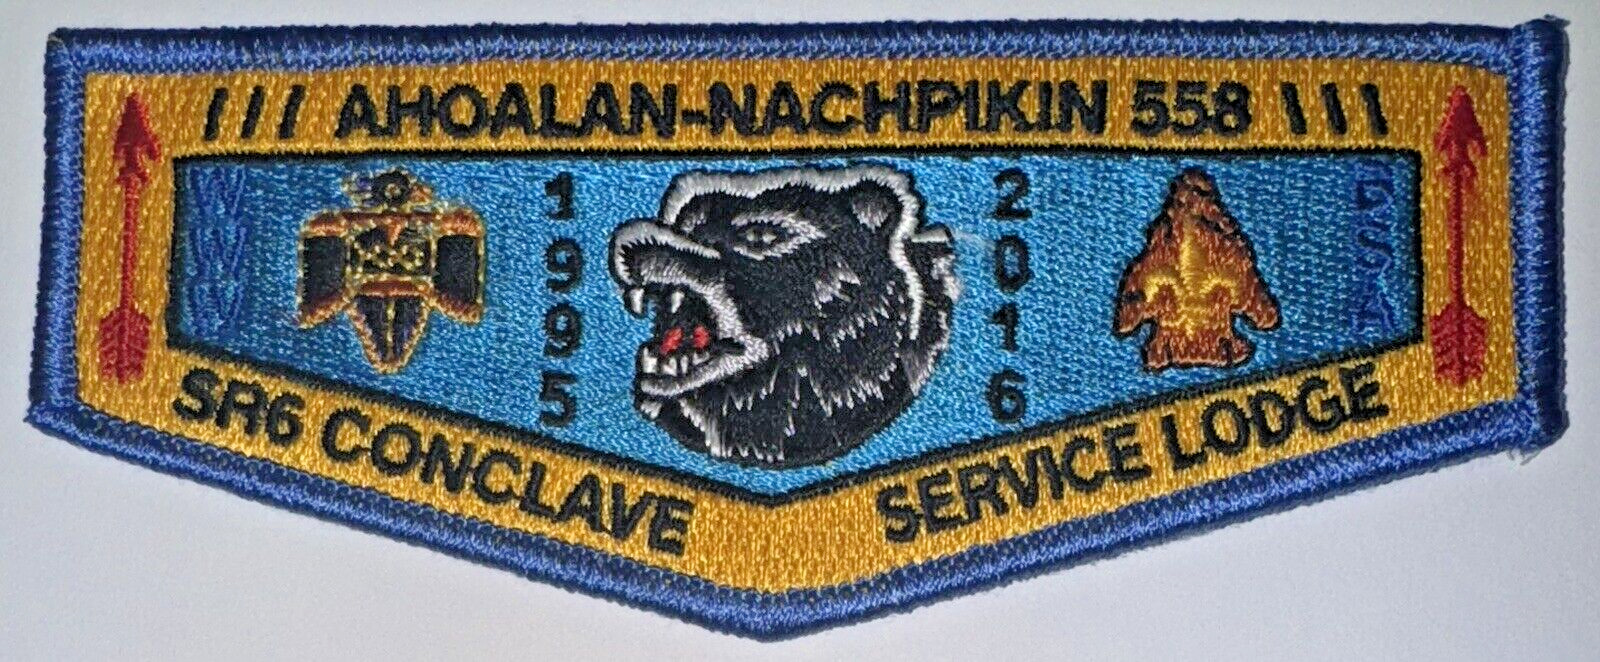 Lodge # 558 Ahoalan Nachpikin 2016 SR-6 Conclave Service Lodge OA Flap MINT